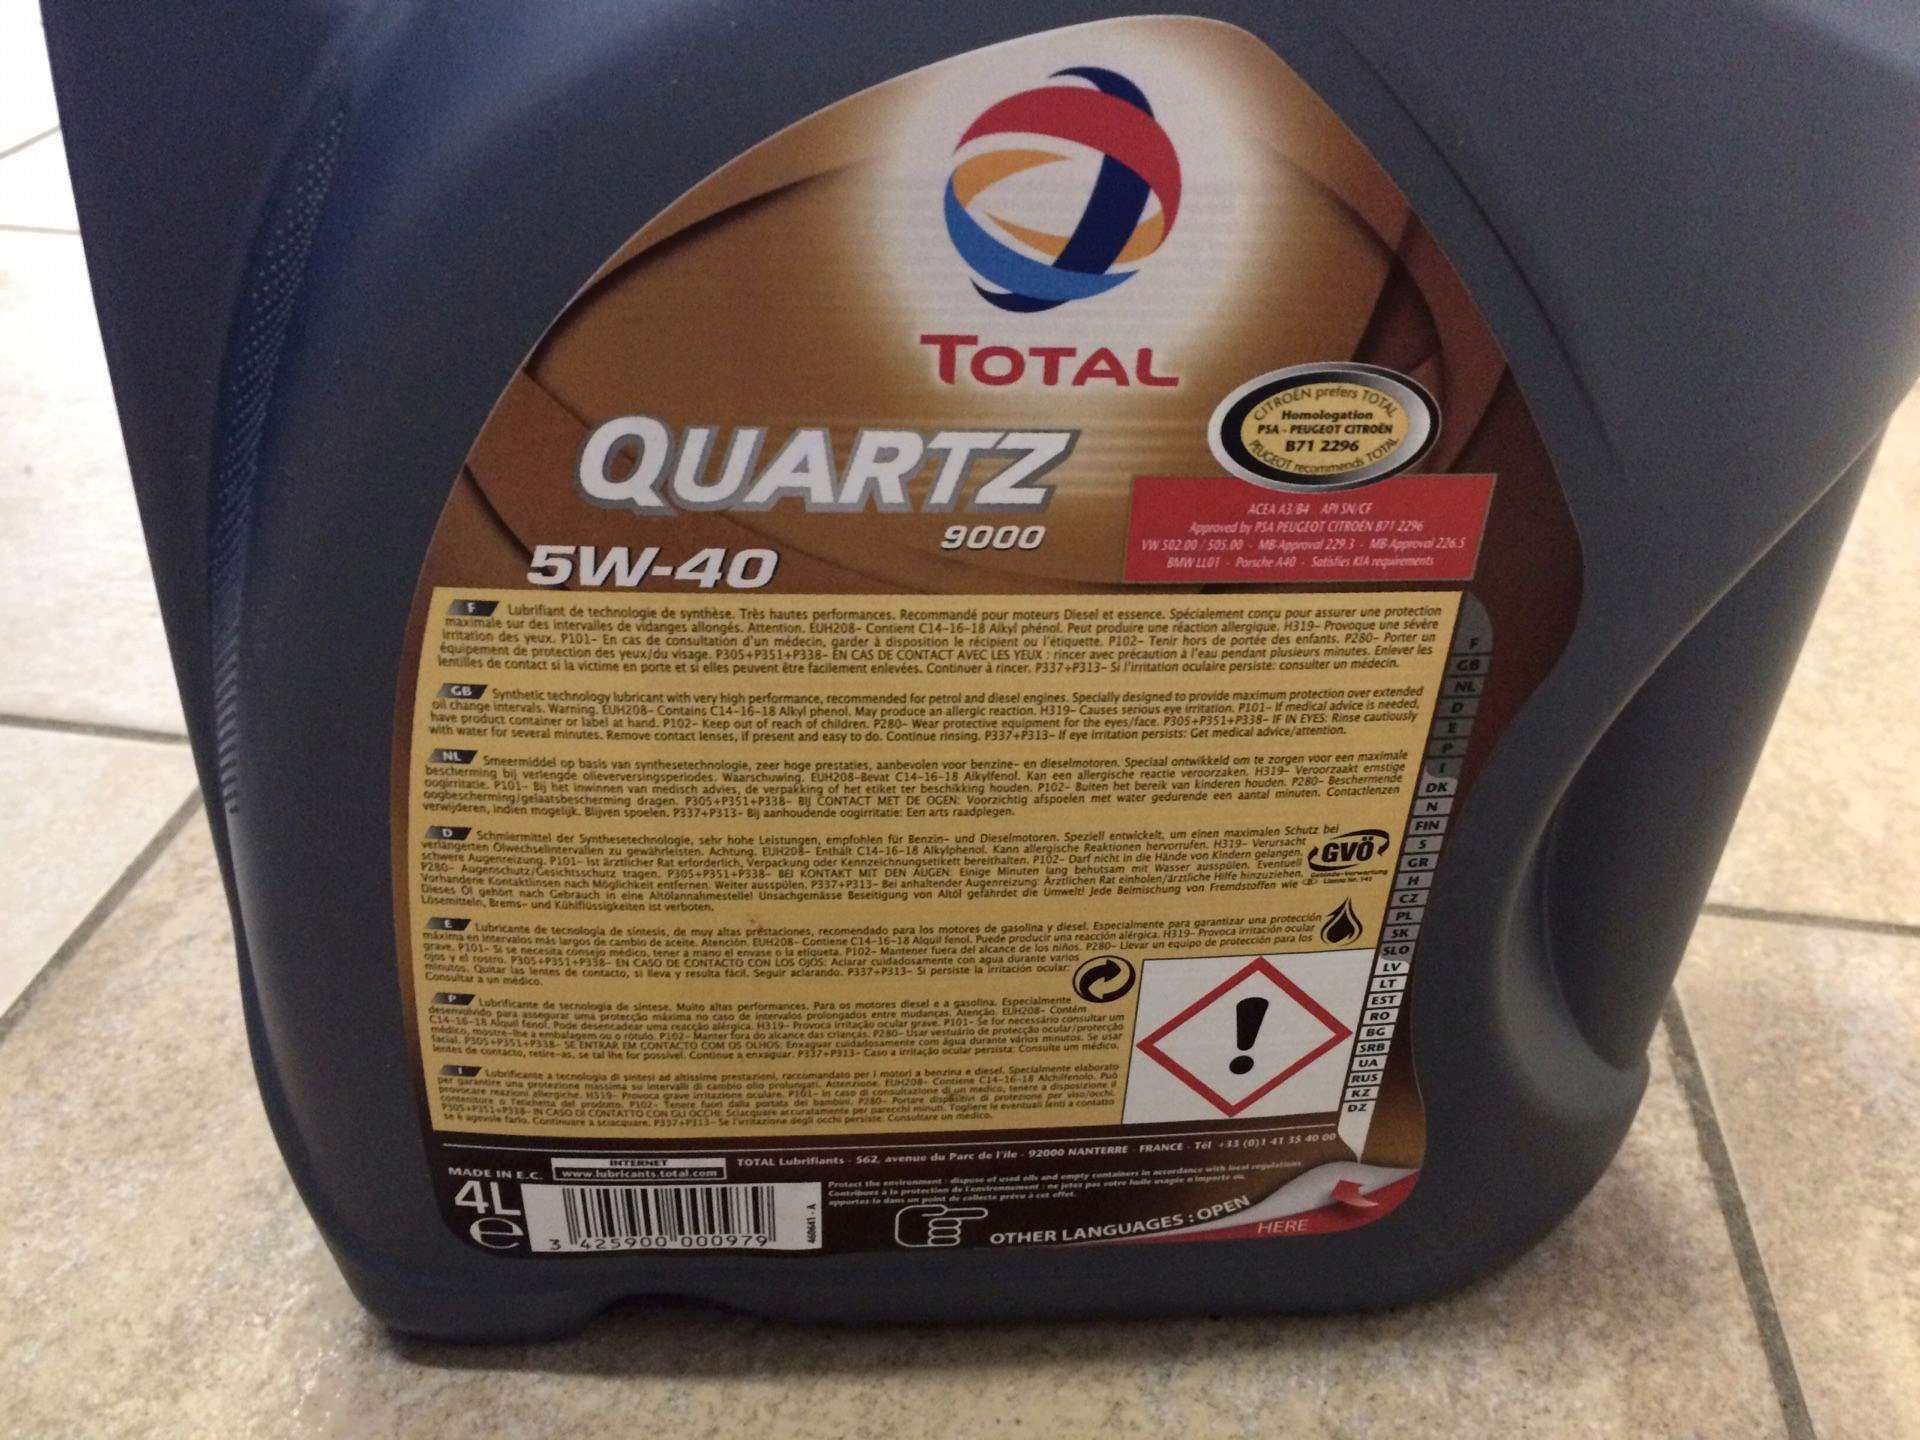 Total 5w40 quartz 9000 синтетика: отзывы, характеристики, артикул, допуски и как отличить подделку масла